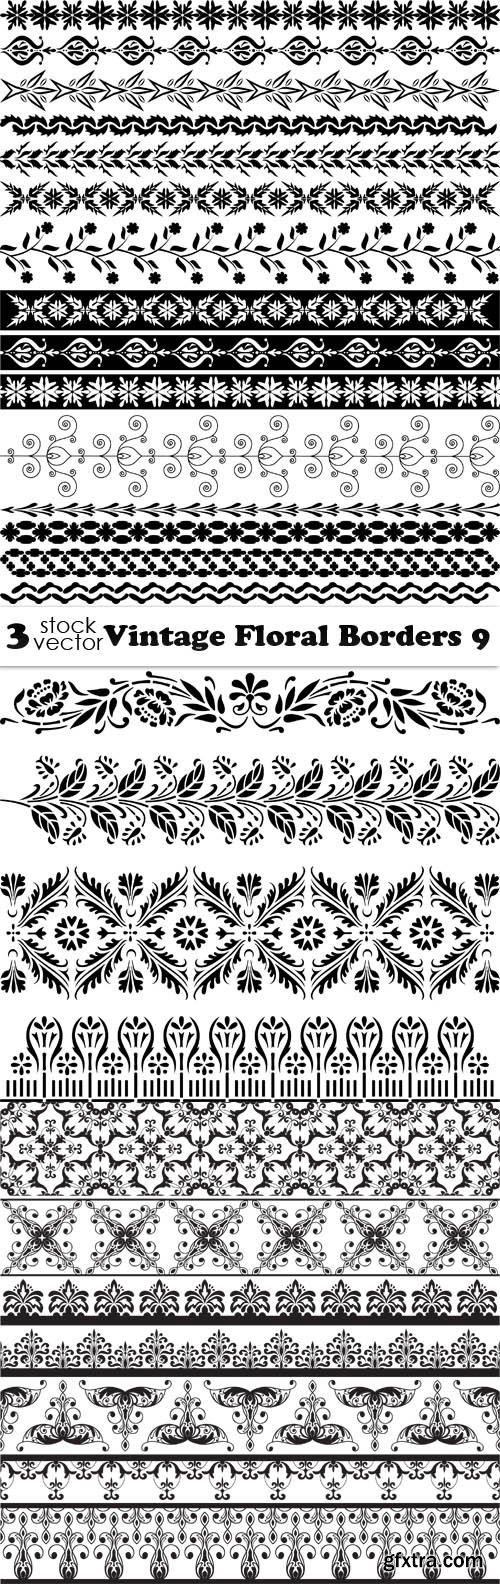 Vectors - Vintage Floral Borders 9